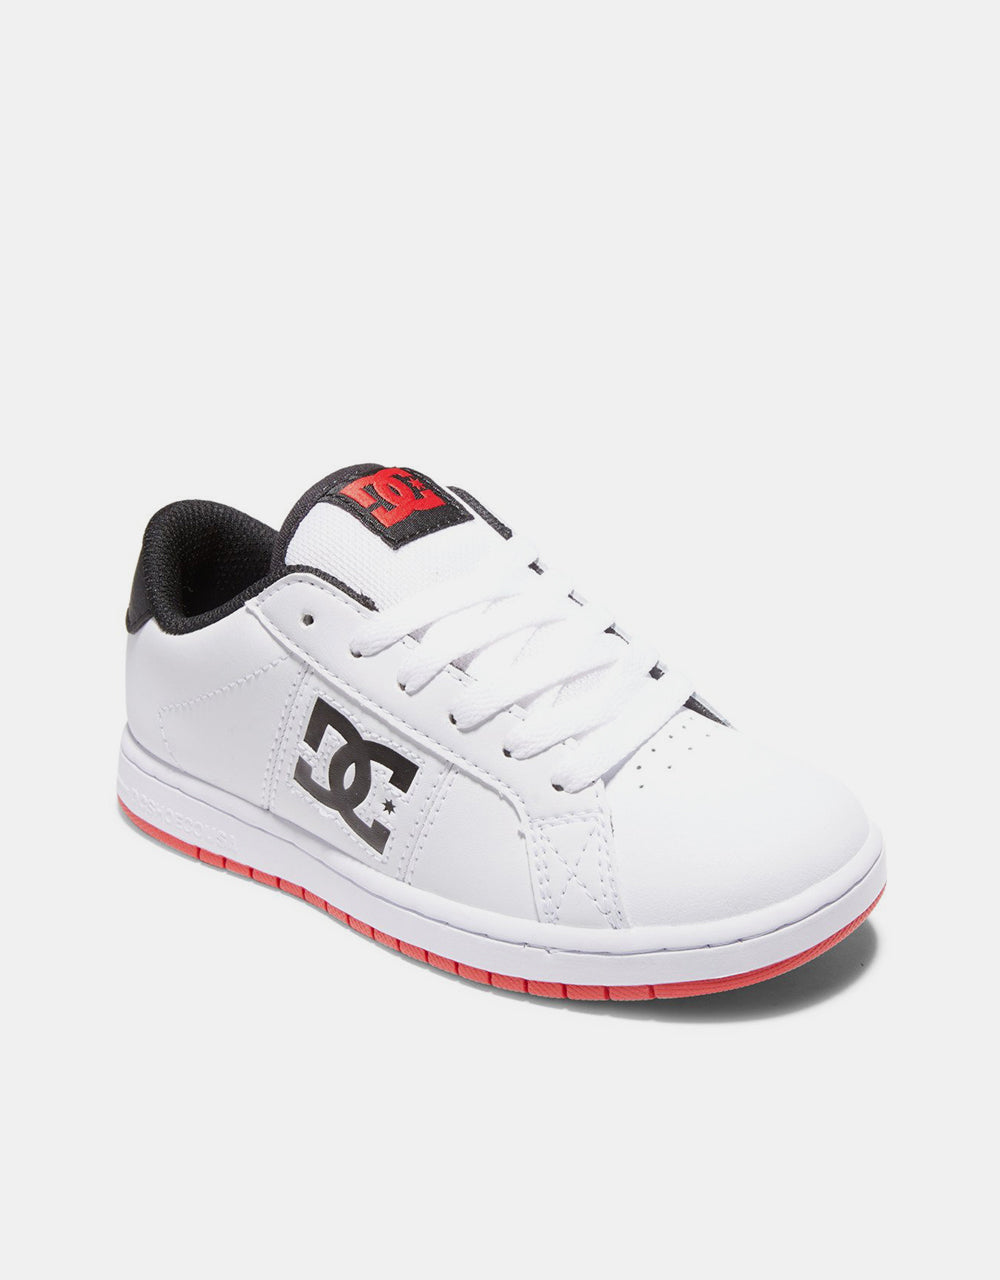 DC Striker Kids Skate Shoes - White/Black/Red